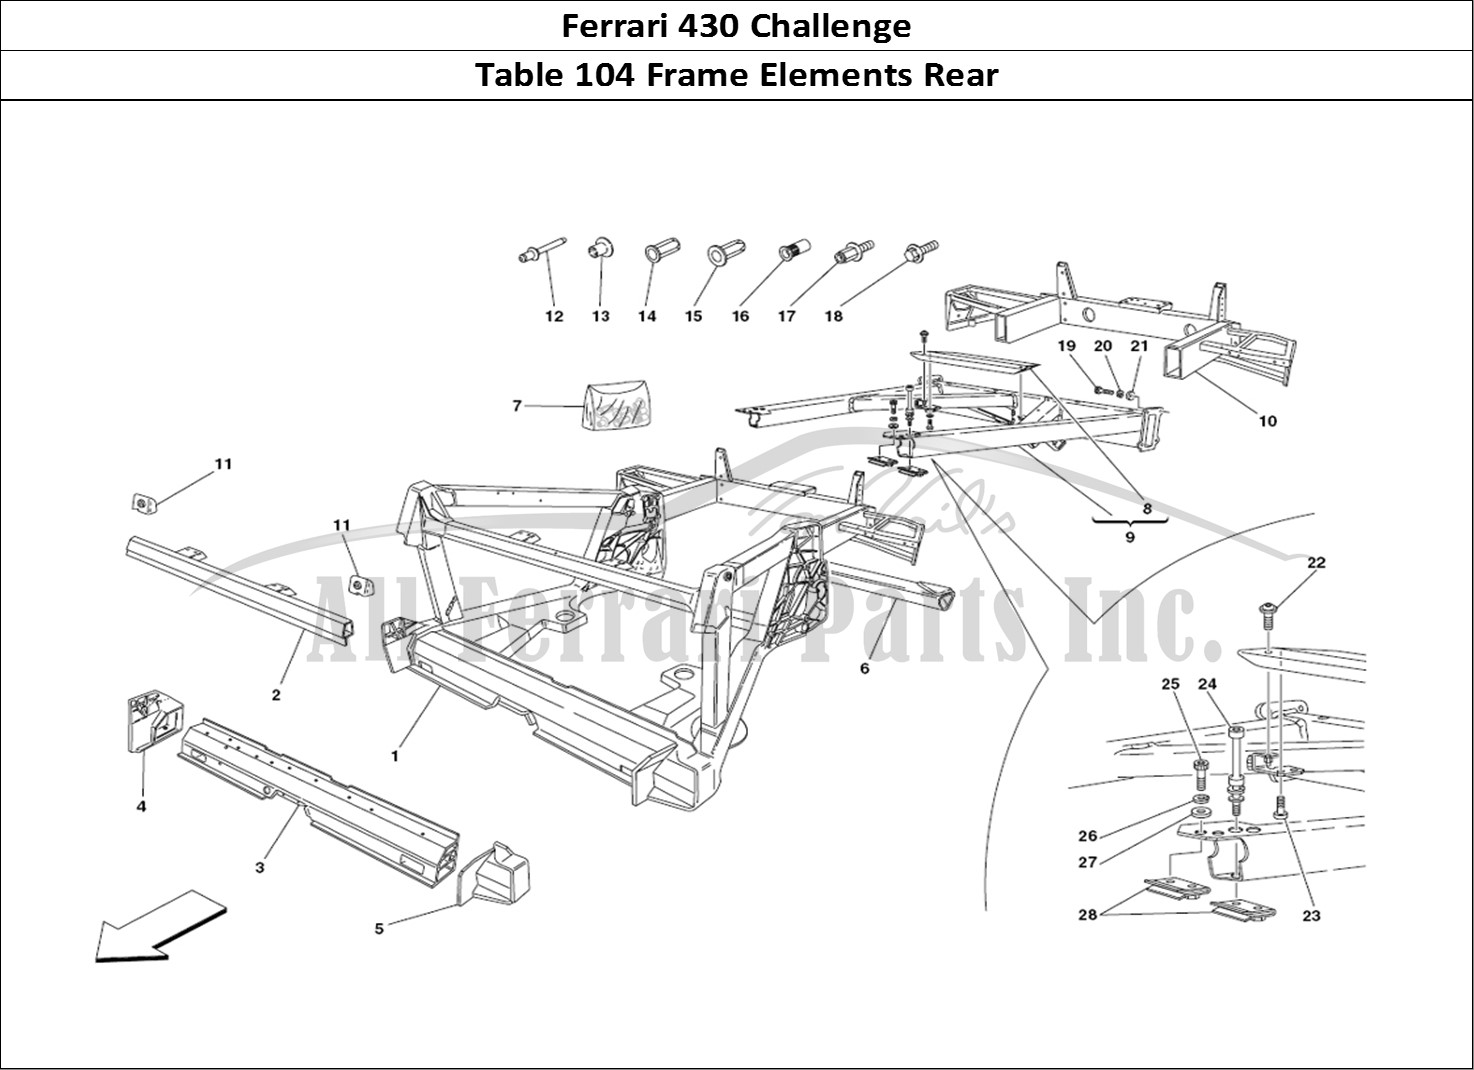 Ferrari Parts Ferrari 430 Challenge (2006) Page 104 Frame - Rear Elements and